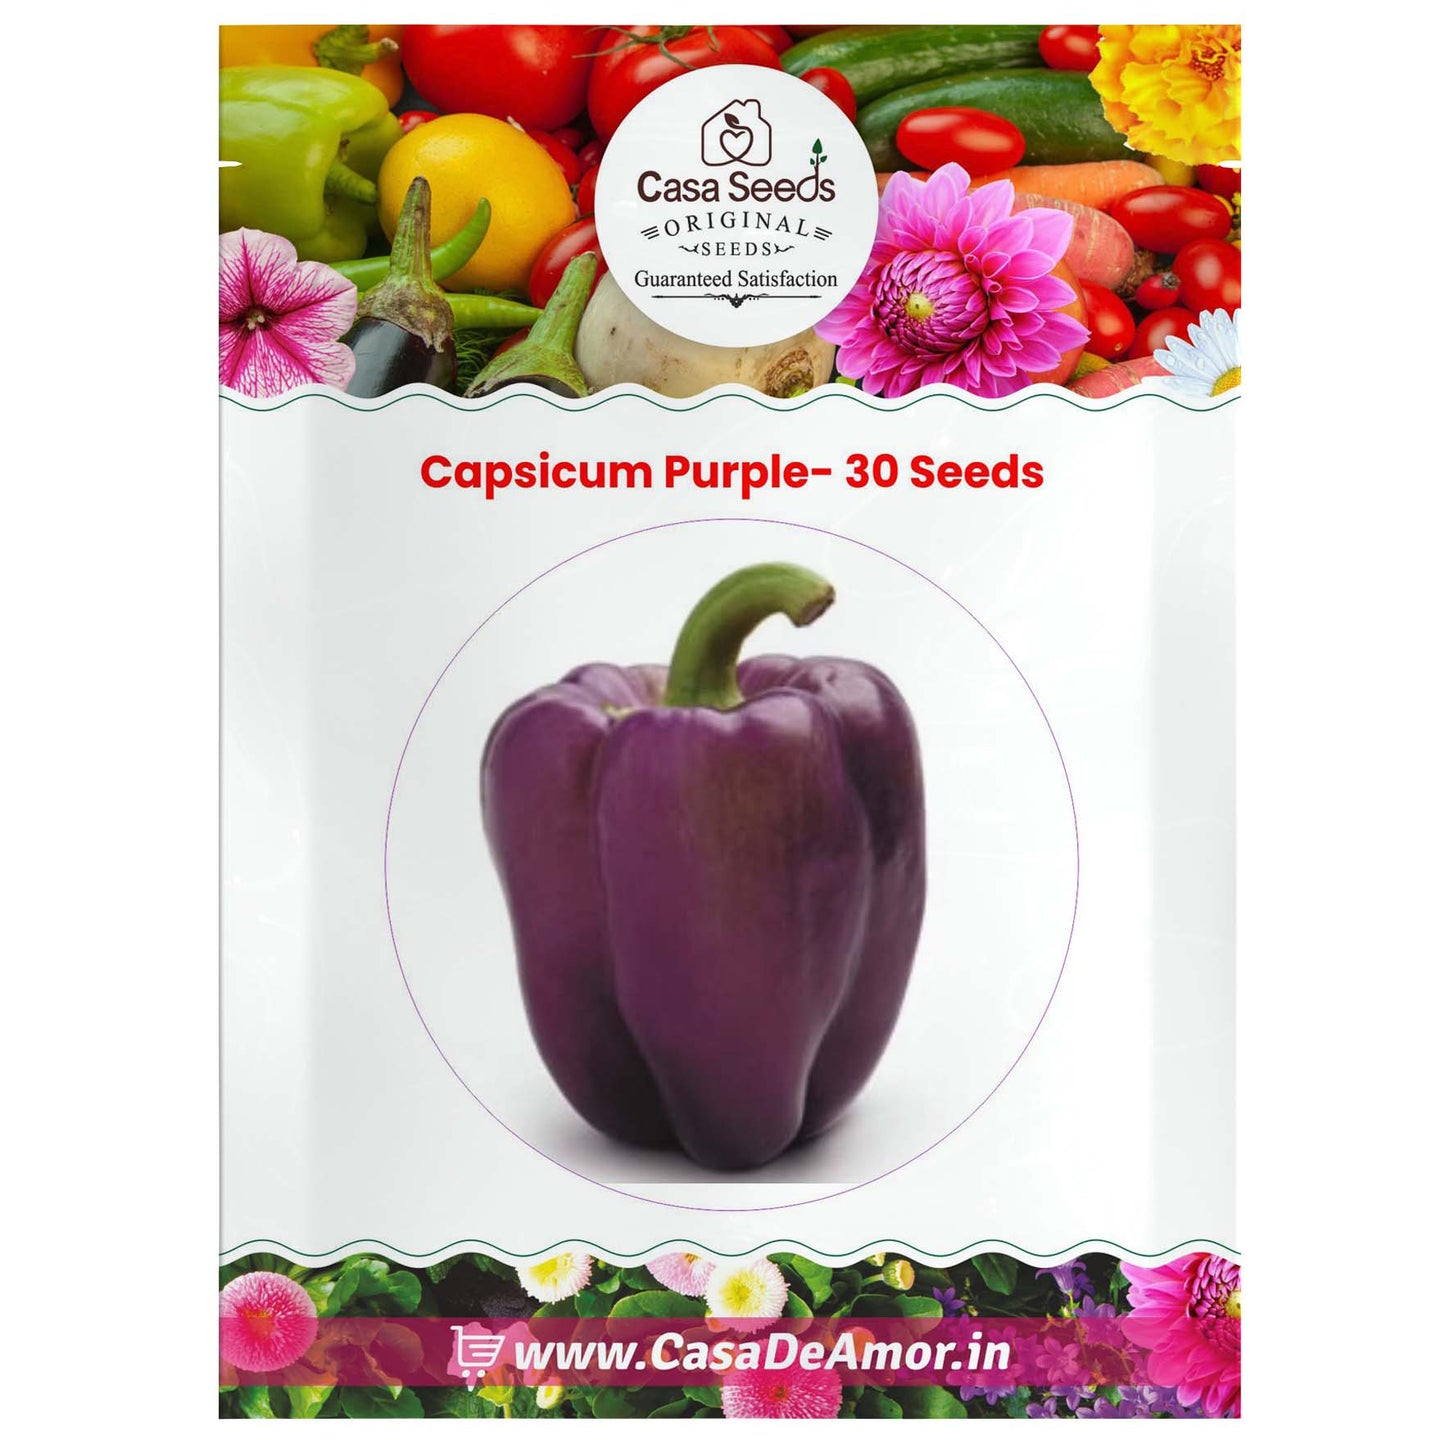 Capsicum Purple- 30 Seeds